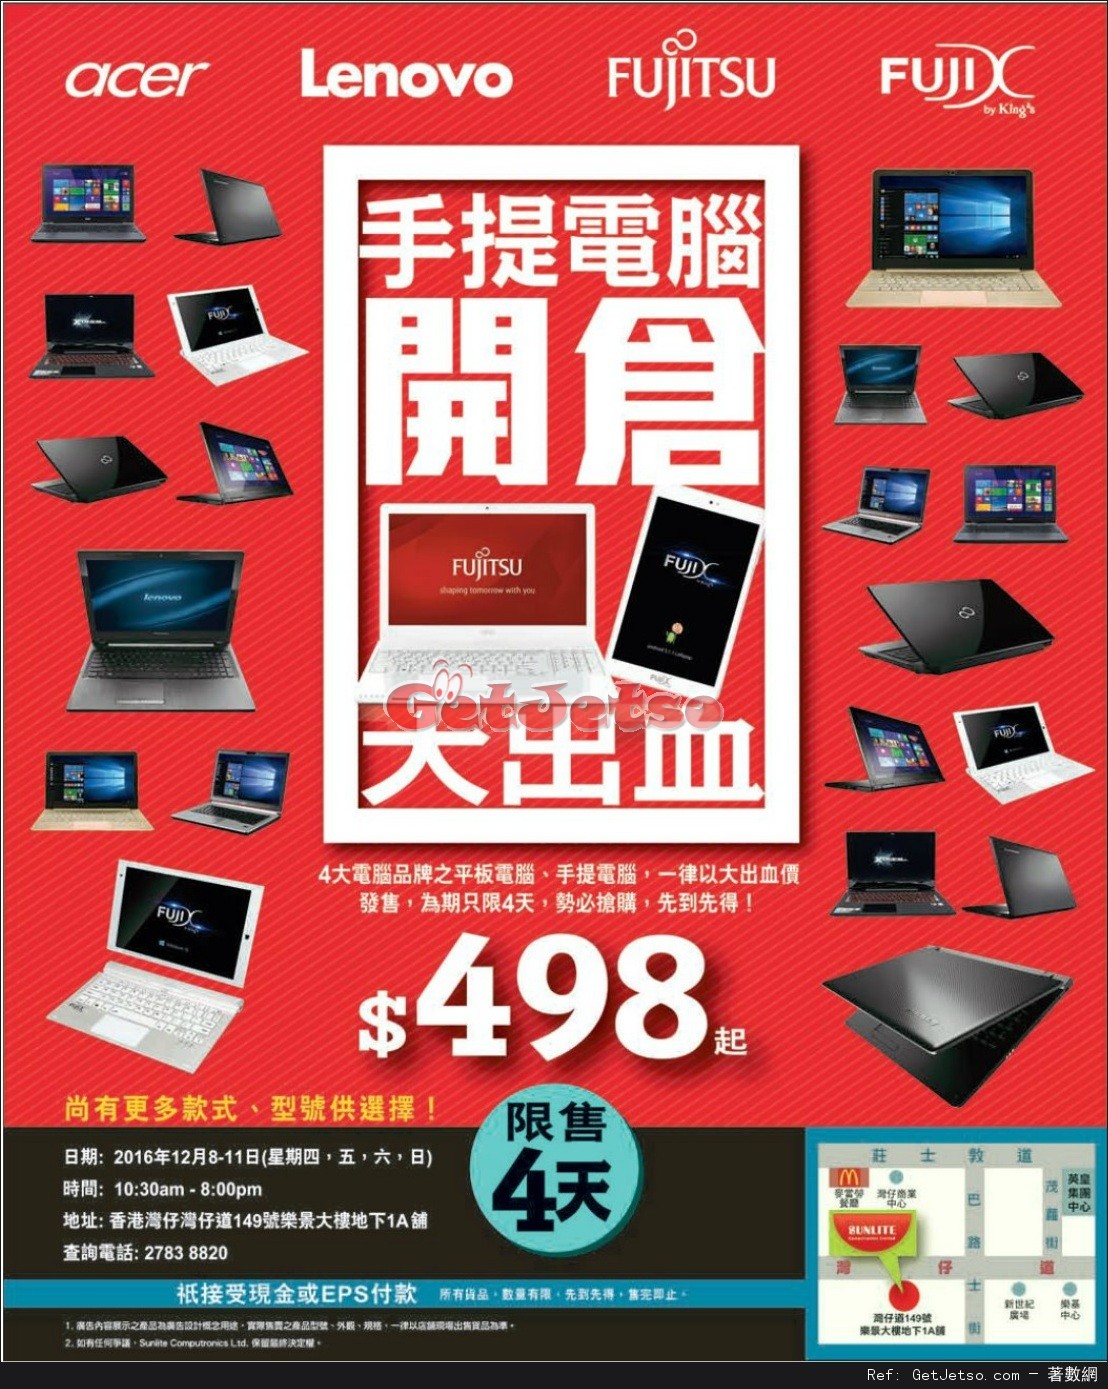 Fujitsu/ Lenovo/ Acer 手提電腦開倉低至8優惠(16年12月8-11日)圖片1